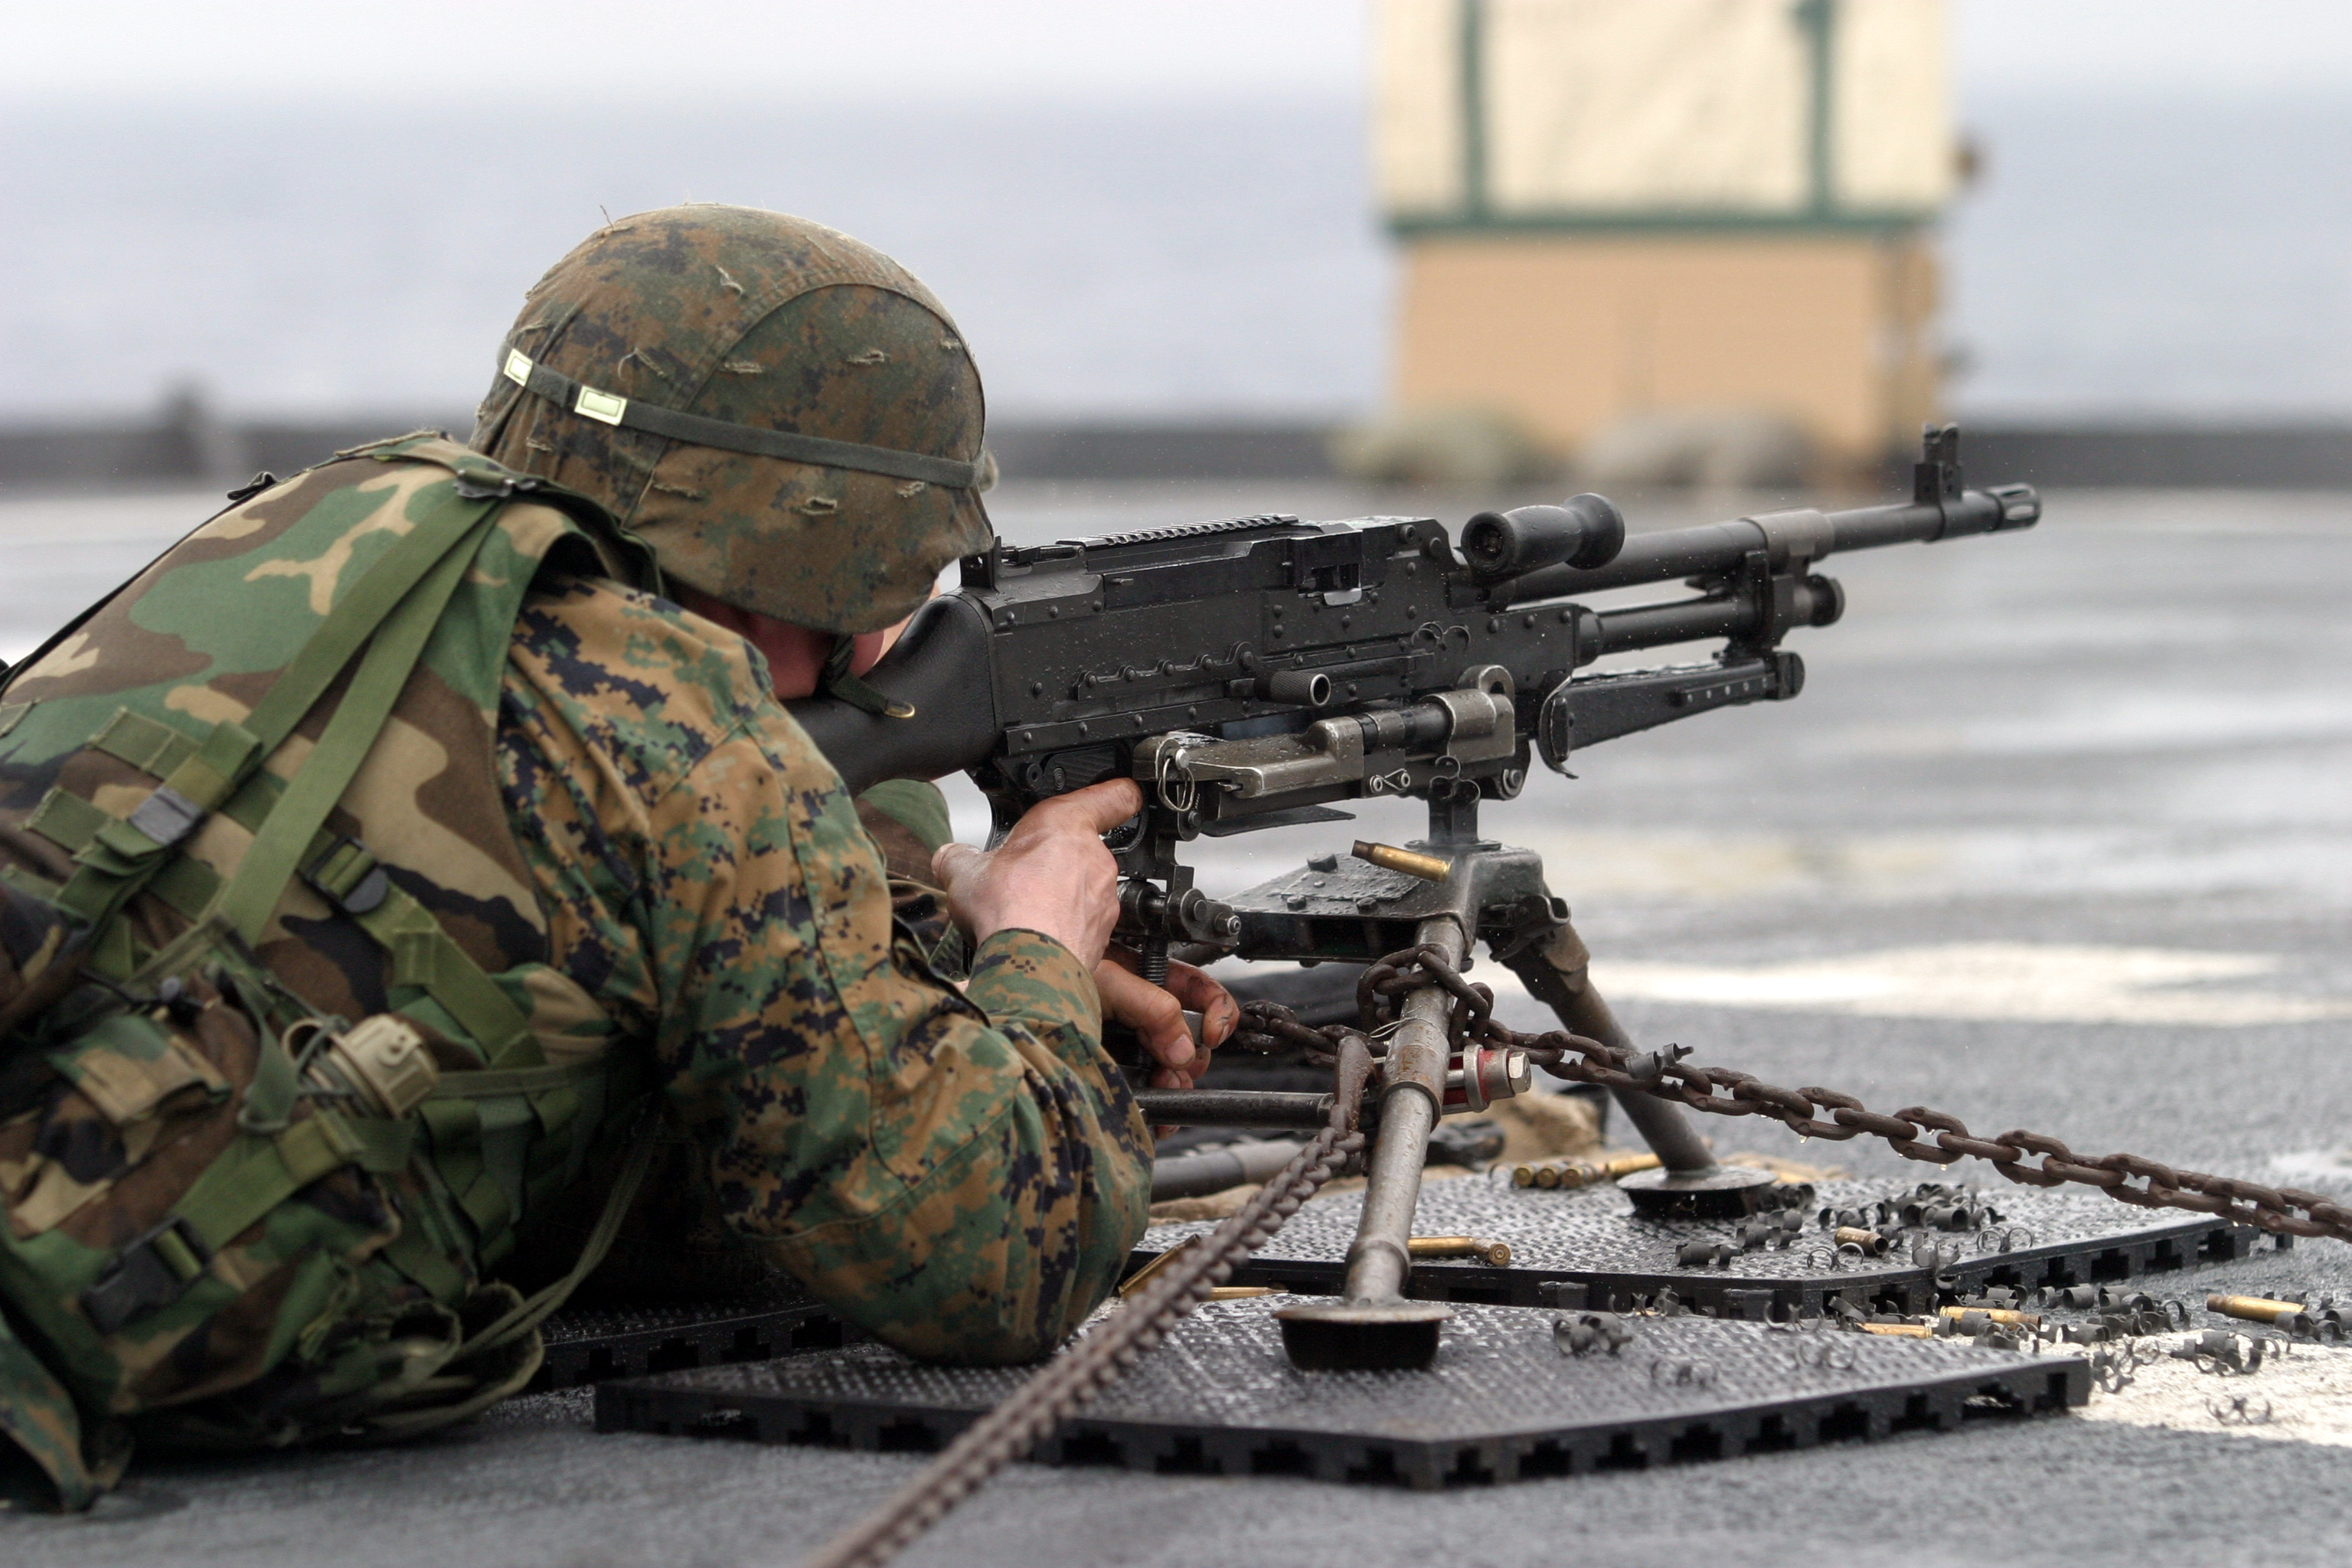 'M240' mounted on a TRIPOD STAND